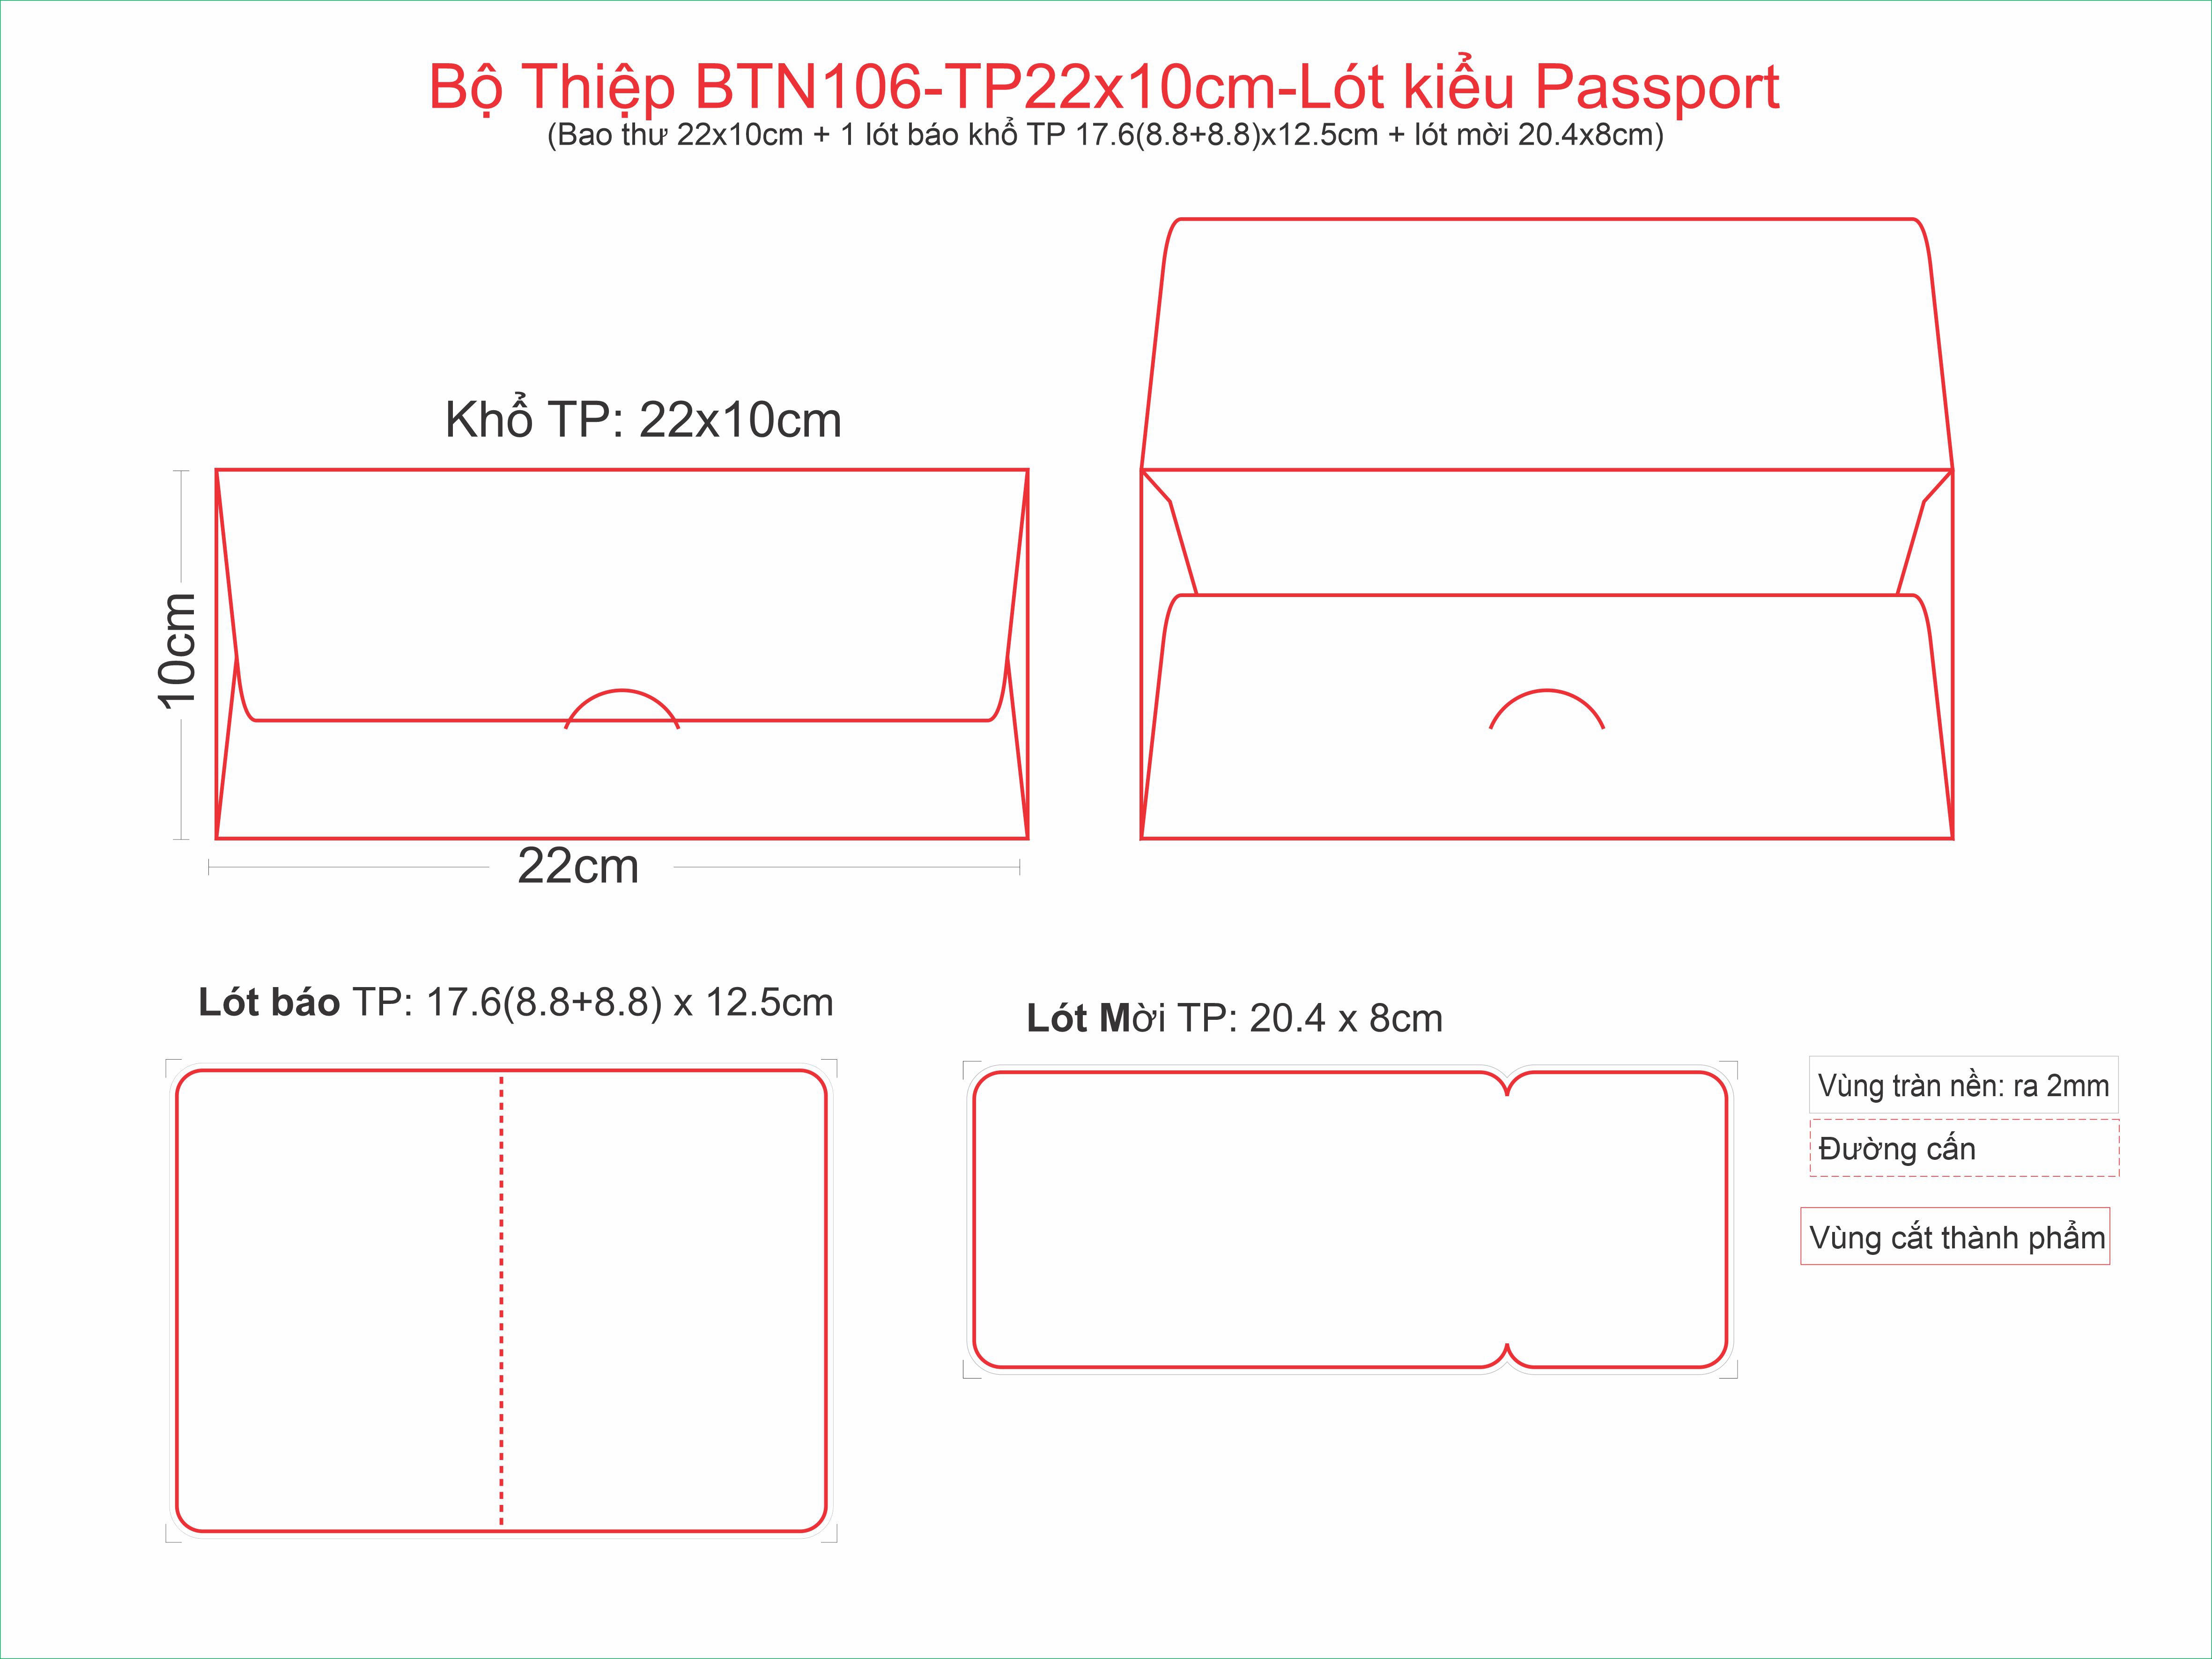 Bộ thiệp BTN106 (Passport)